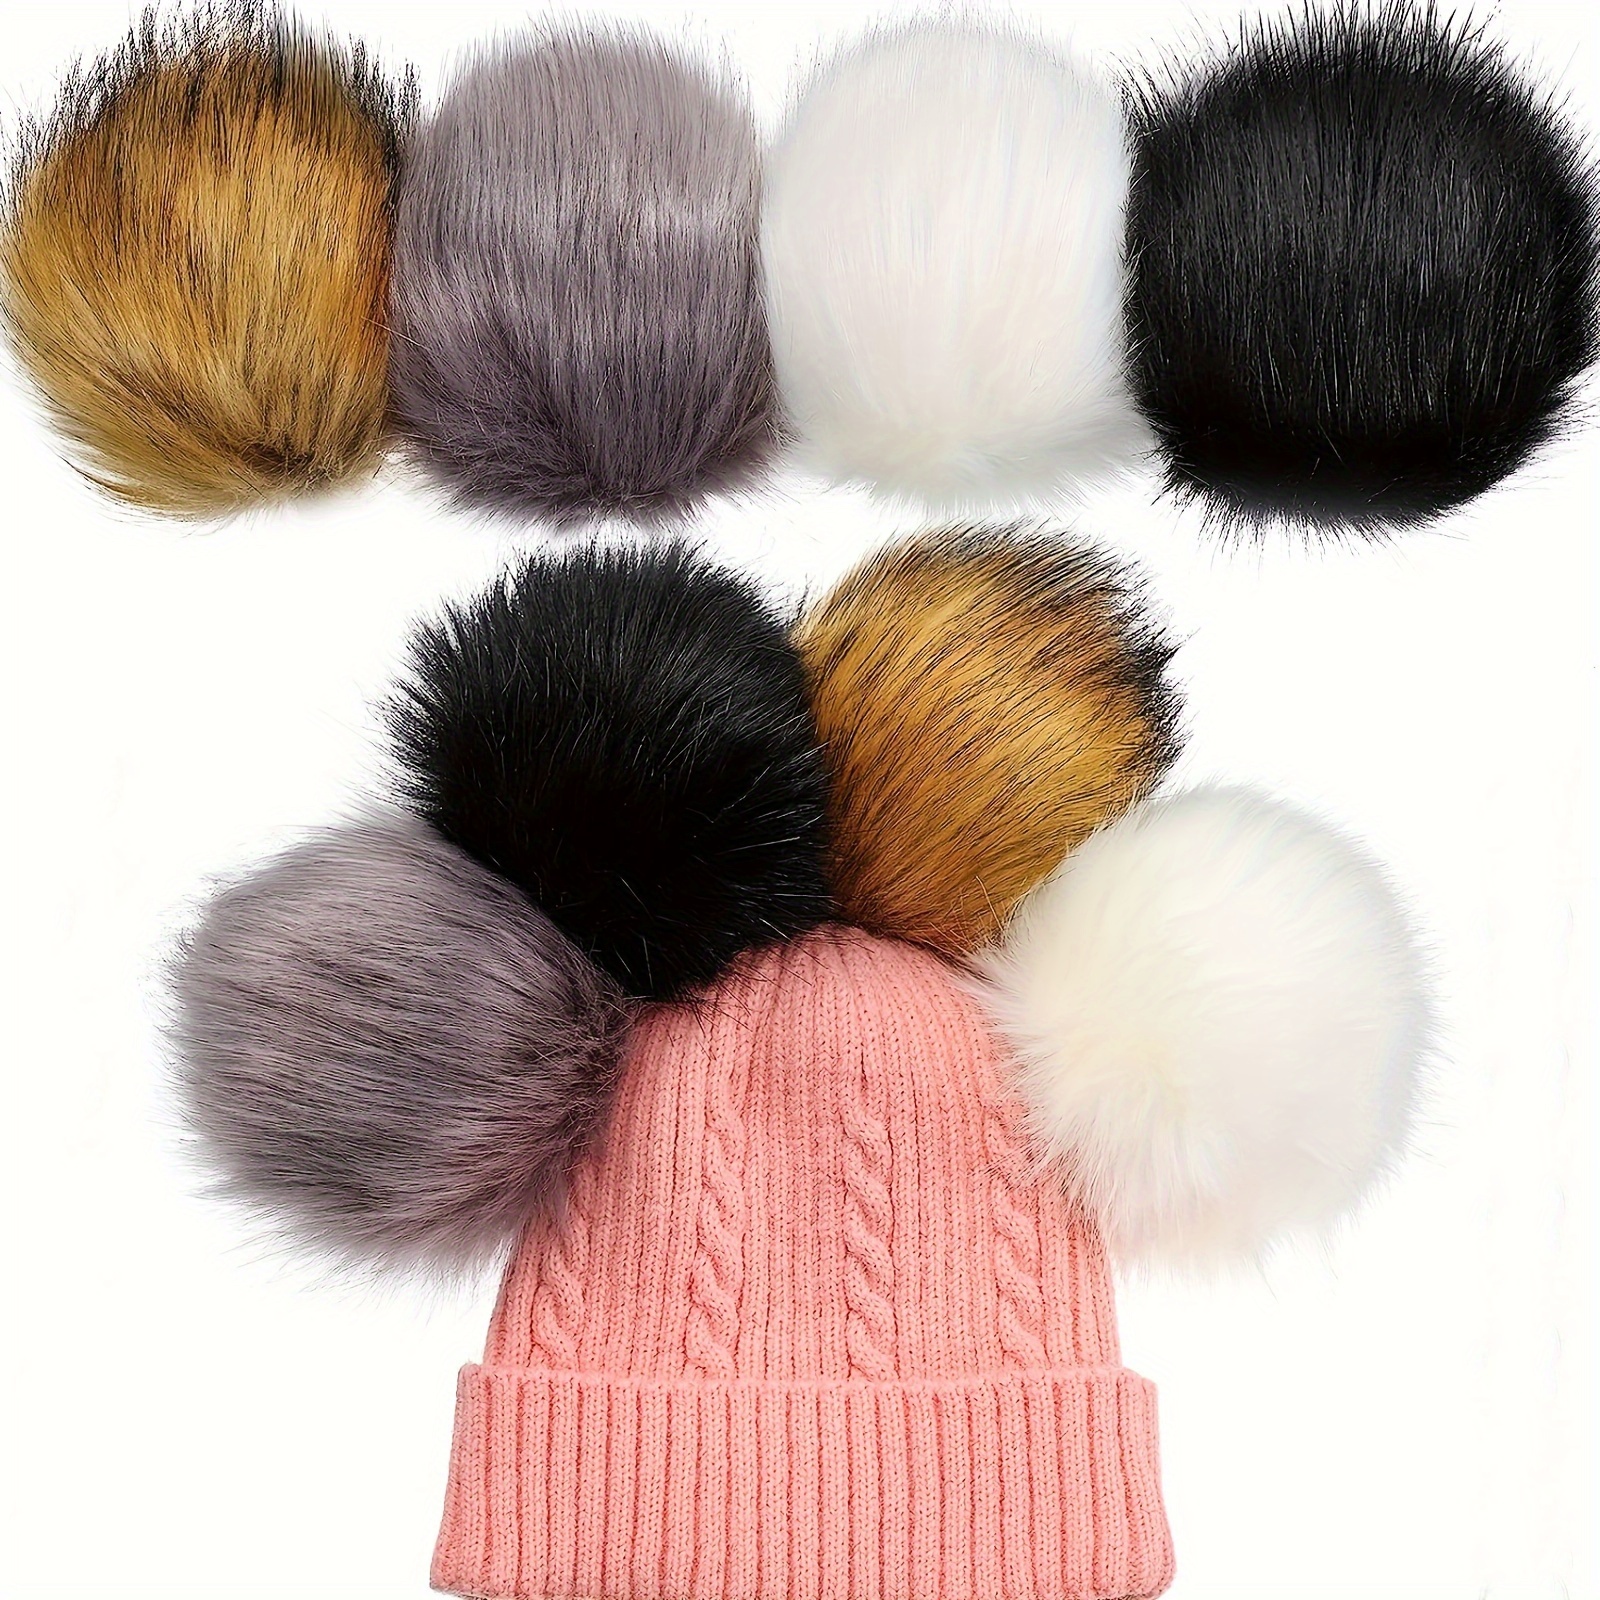  20 Pcs Faux Fur Pom Poms for Hats - 4 Inch Fluffy Pom